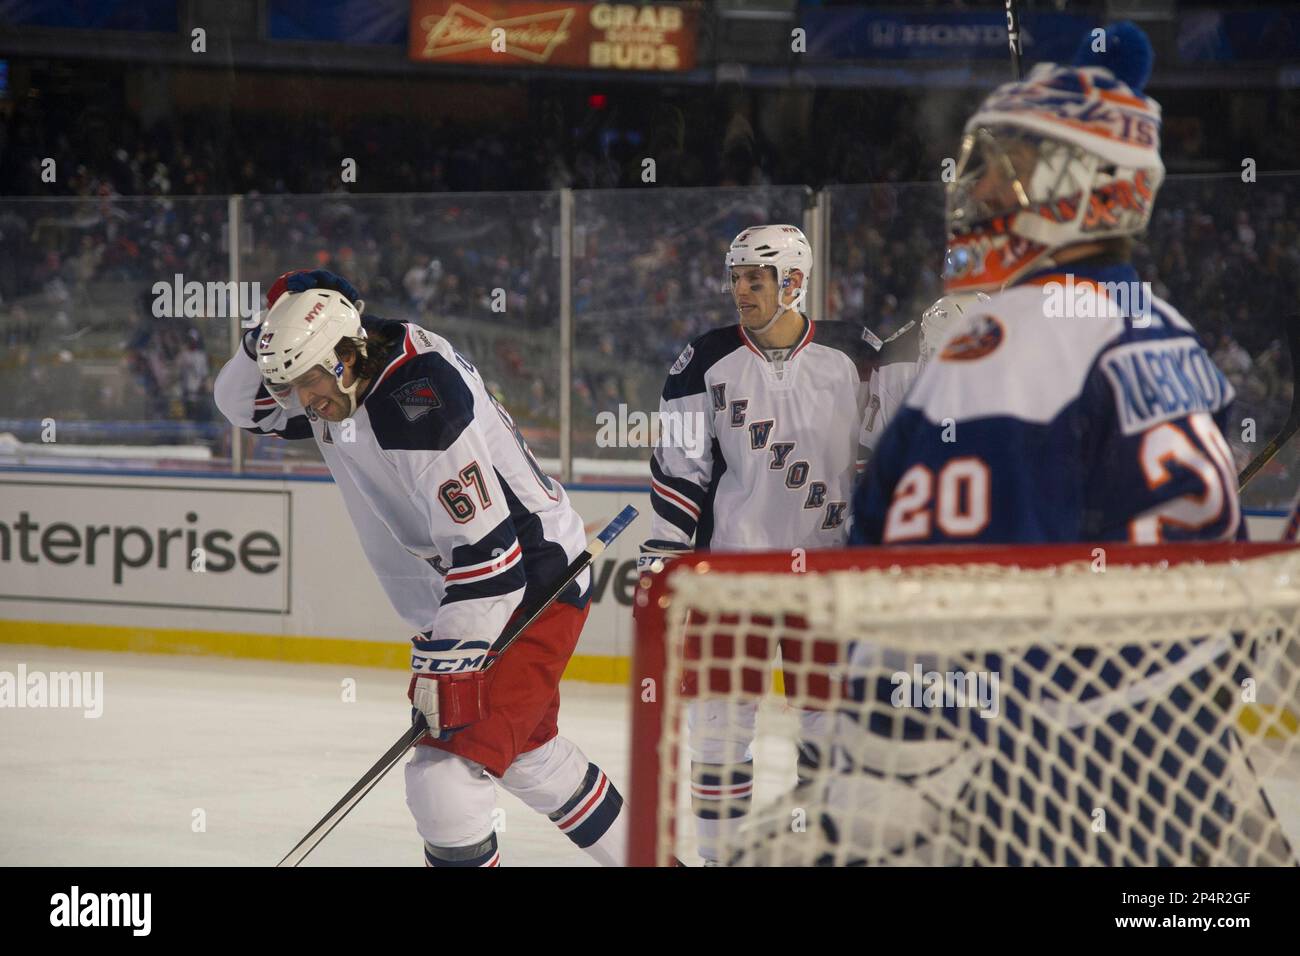 Jan. 29, 2014 - Bronx, New York, U.S - January 29, 2014: New York Rangers  left wing Benoit Pouliot (67) is excited in front of New York Islanders  goalie Evgeni Nabokov (20)